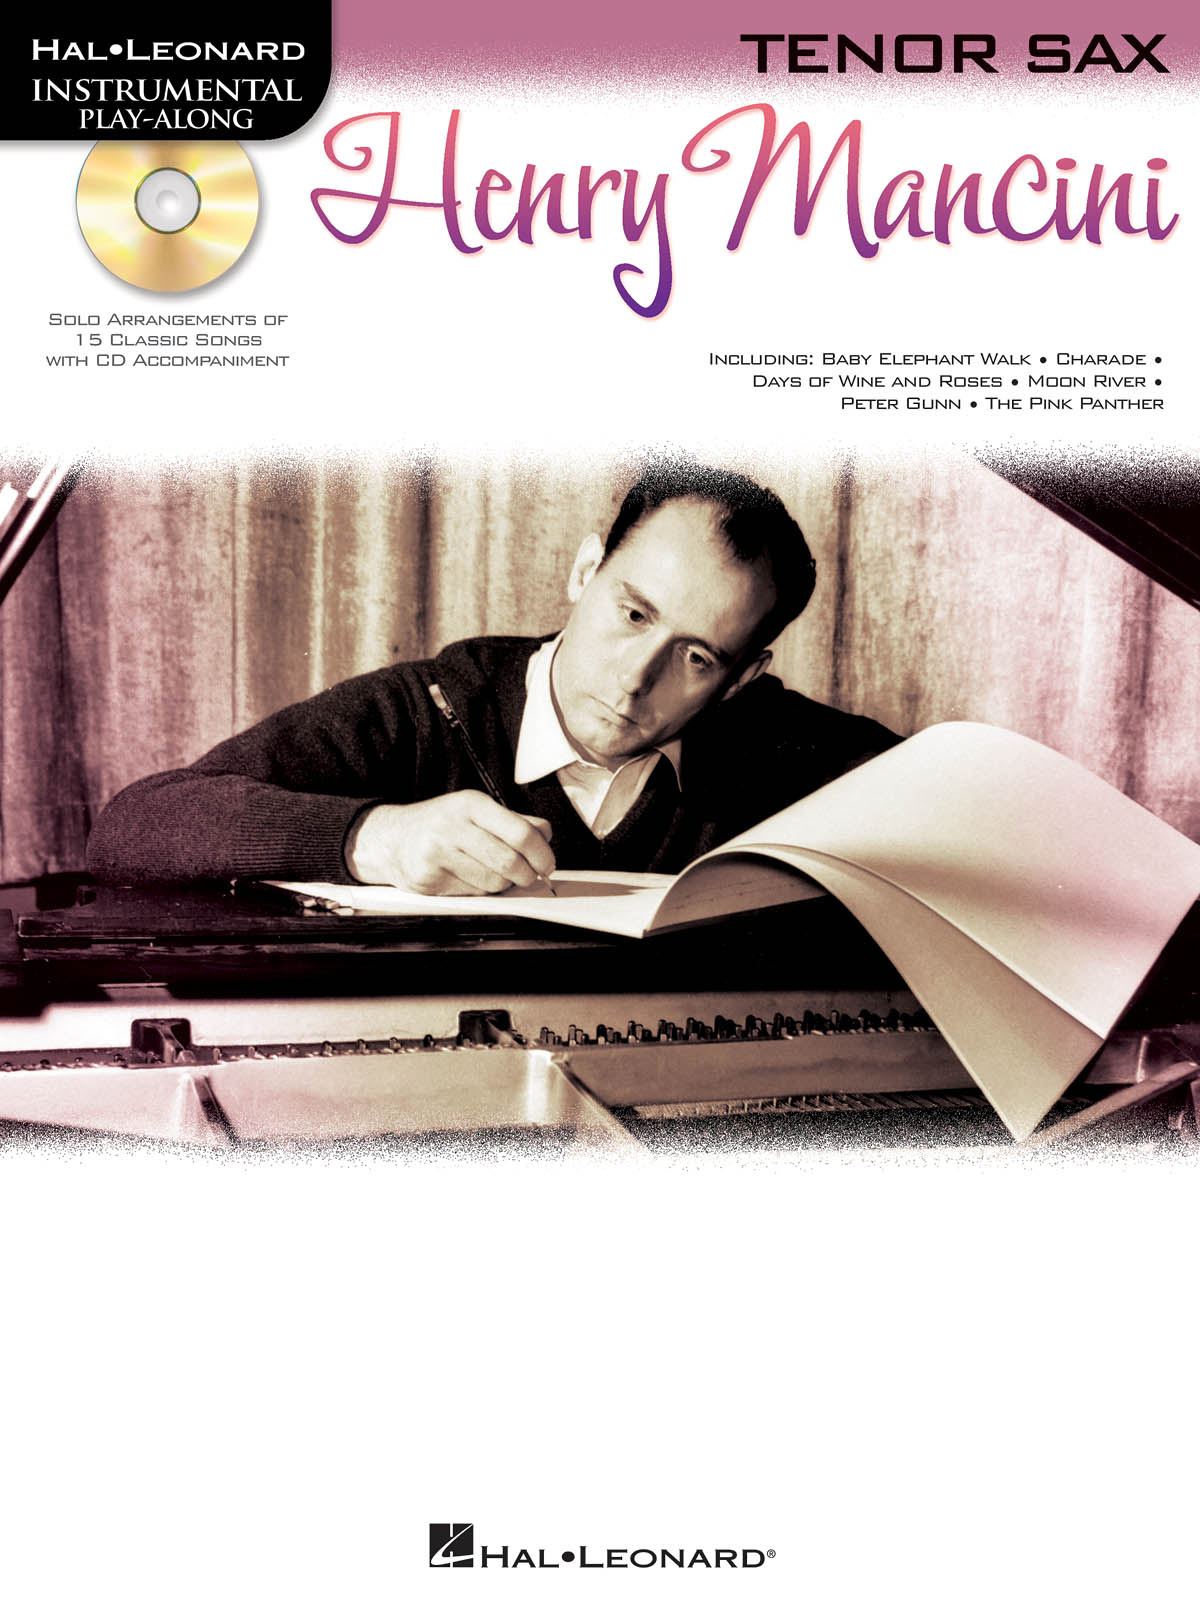 Instrumental Play-Along fuer Tenor Sax Henry Mancini